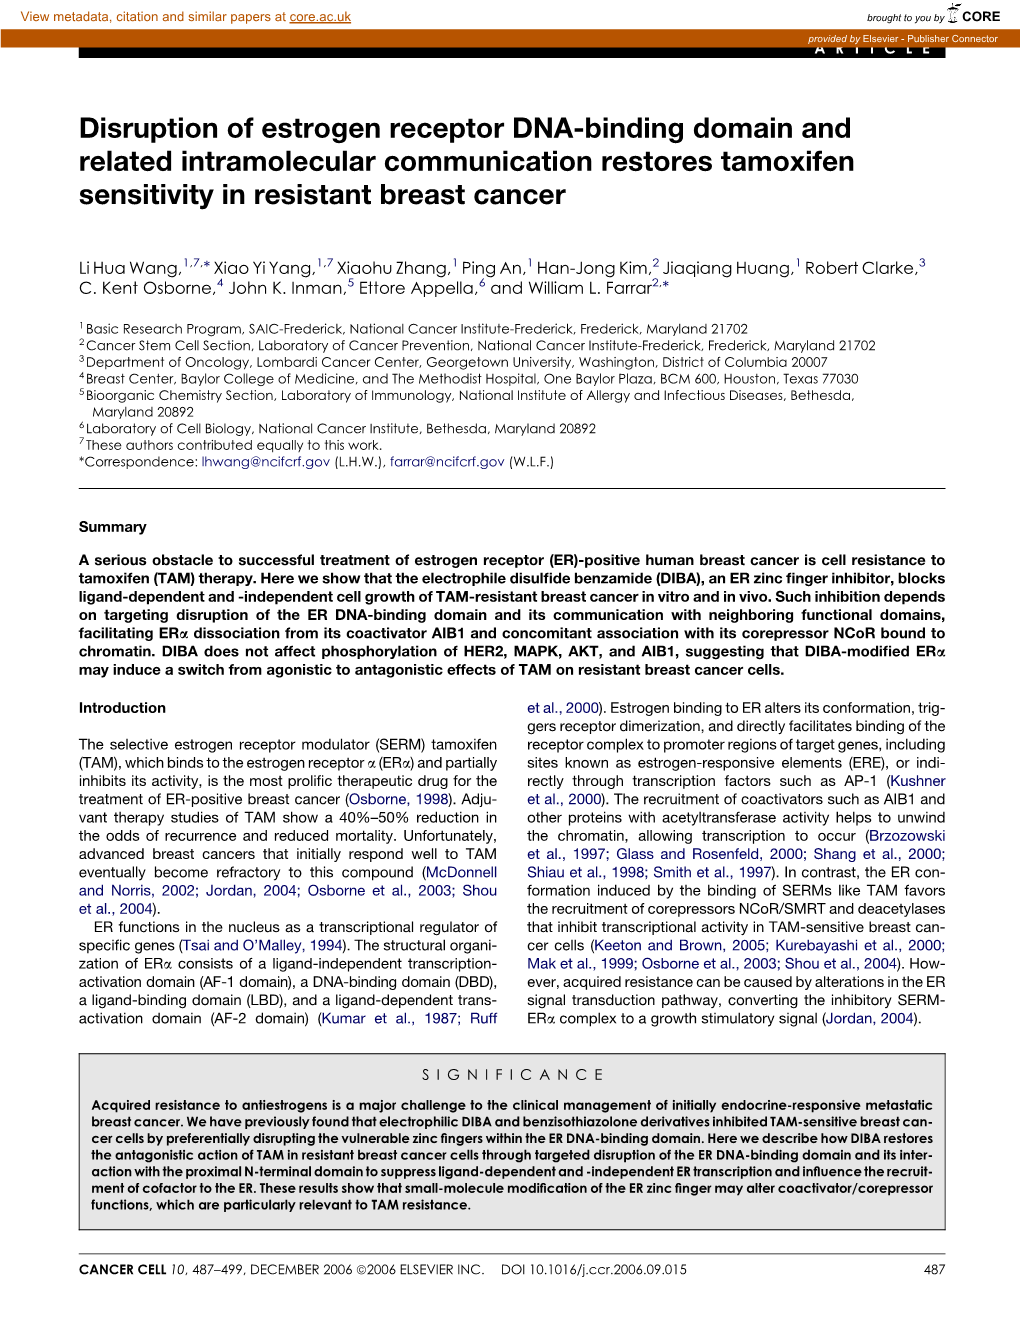 Disruption of Estrogen Receptor DNA-Binding Domain and Related Intramolecular Communication Restores Tamoxifen Sensitivity in Resistant Breast Cancer